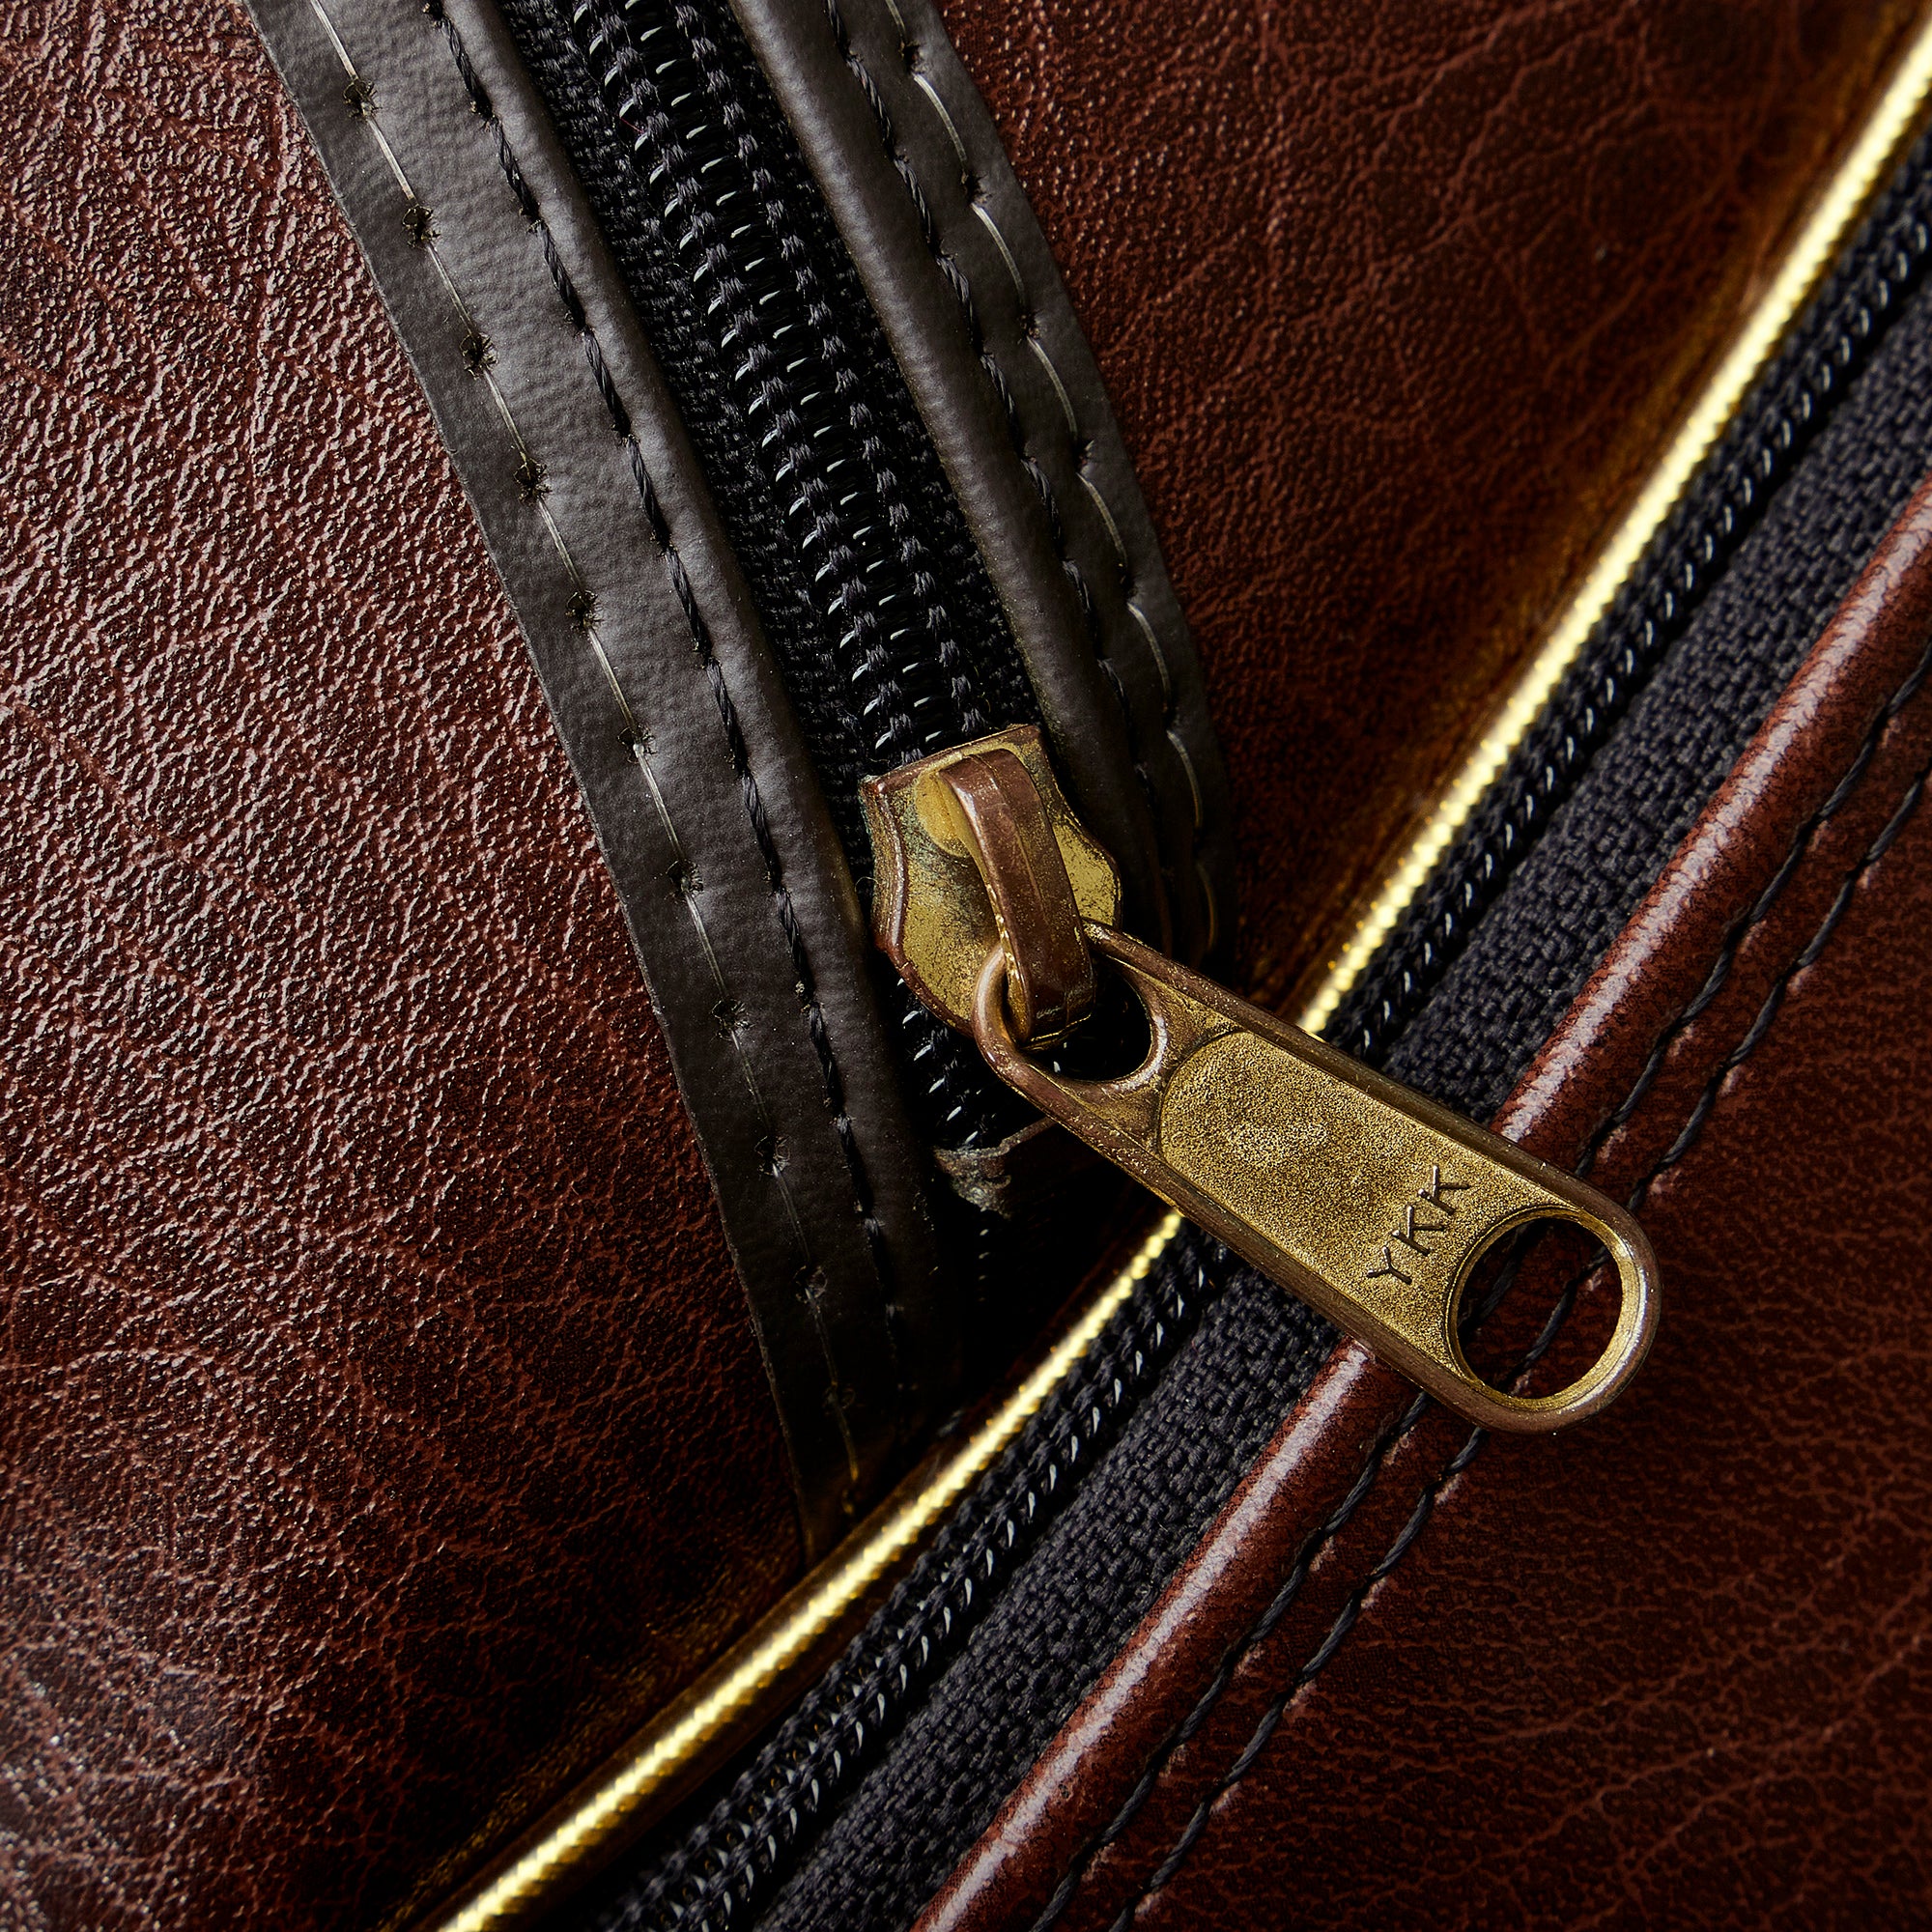 Burberry Haymarket Check Clara Wristlet w/ Tags - Brown Mini Bags